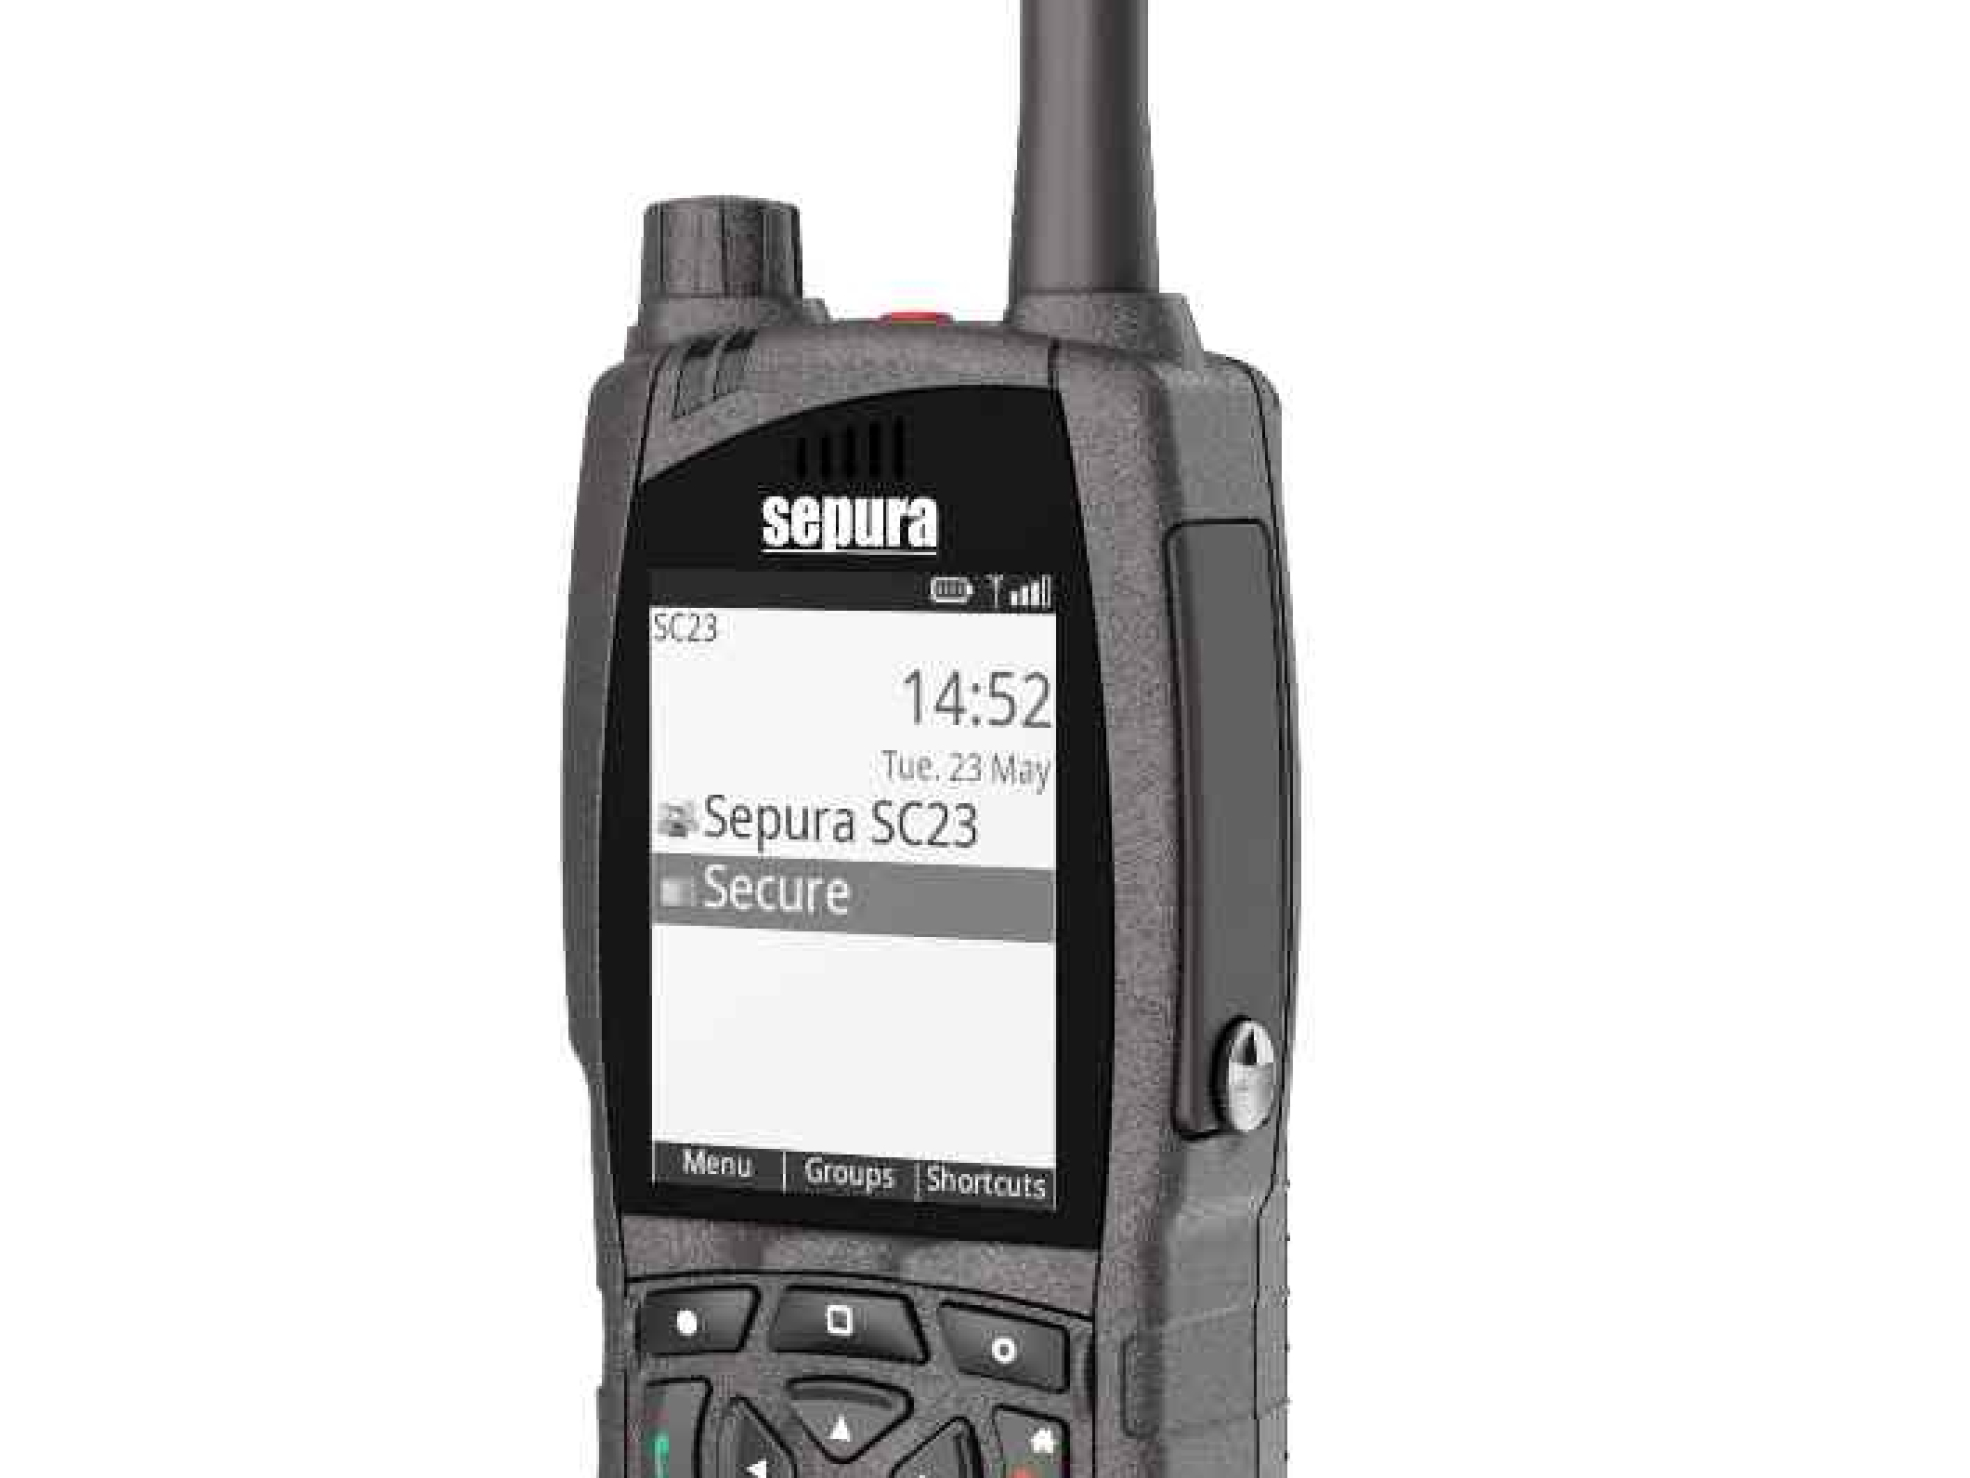 Sepura brings new robust radio solution to market